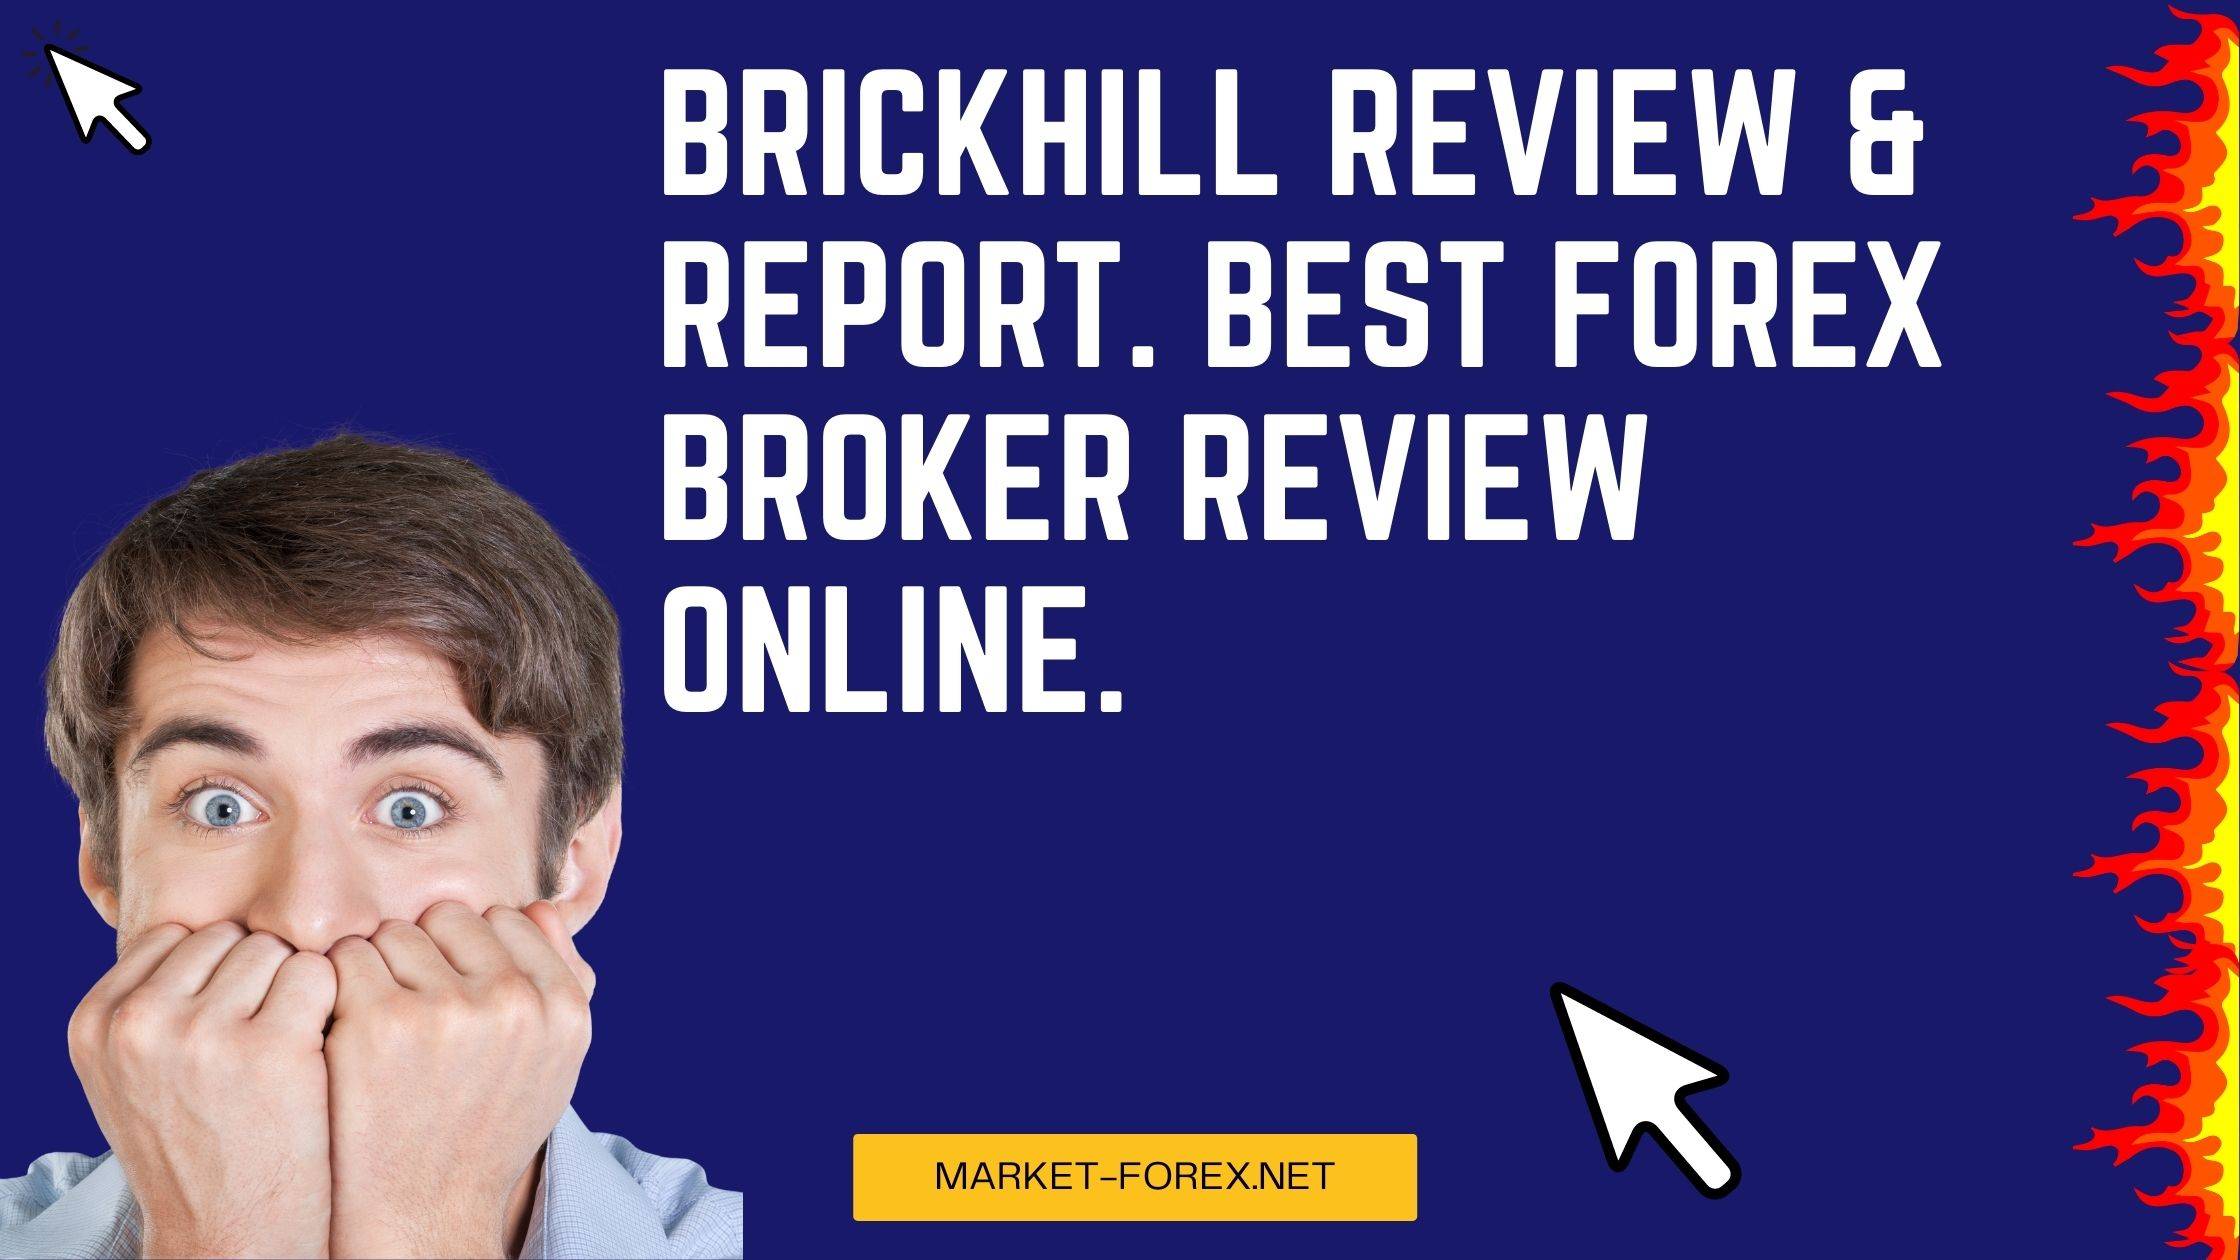 BrickHill Review